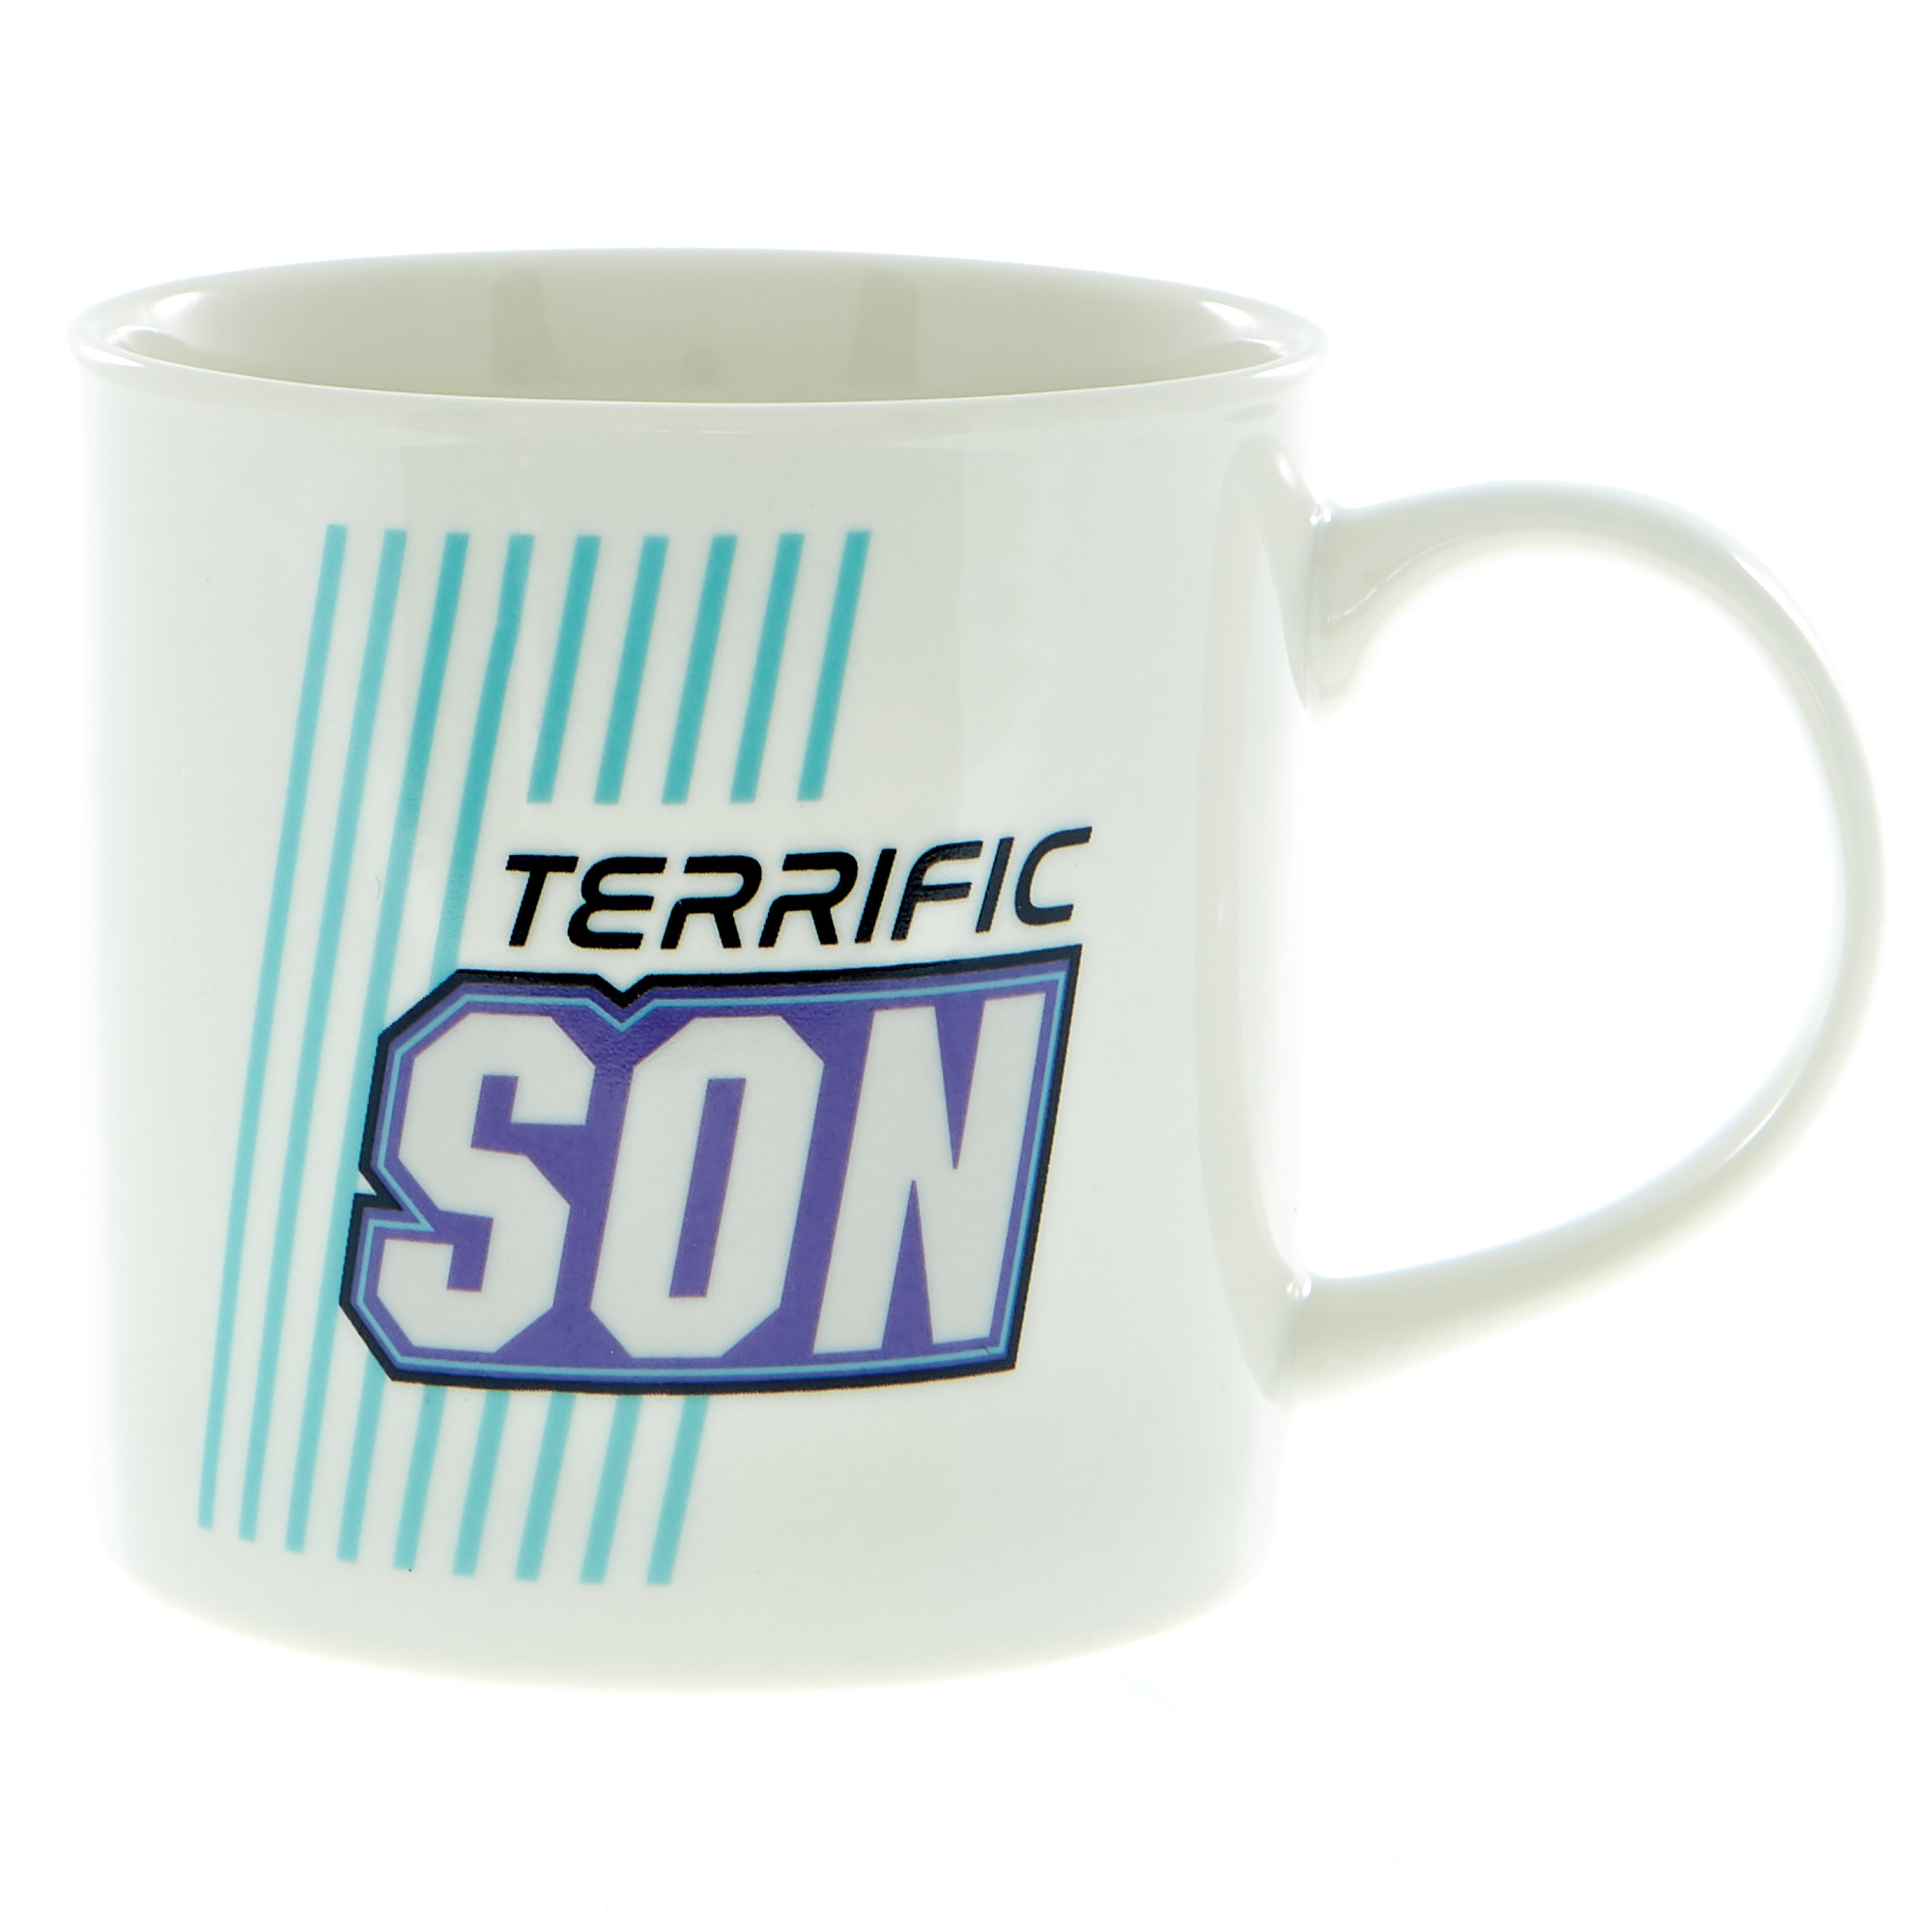 Terrific Son Mug